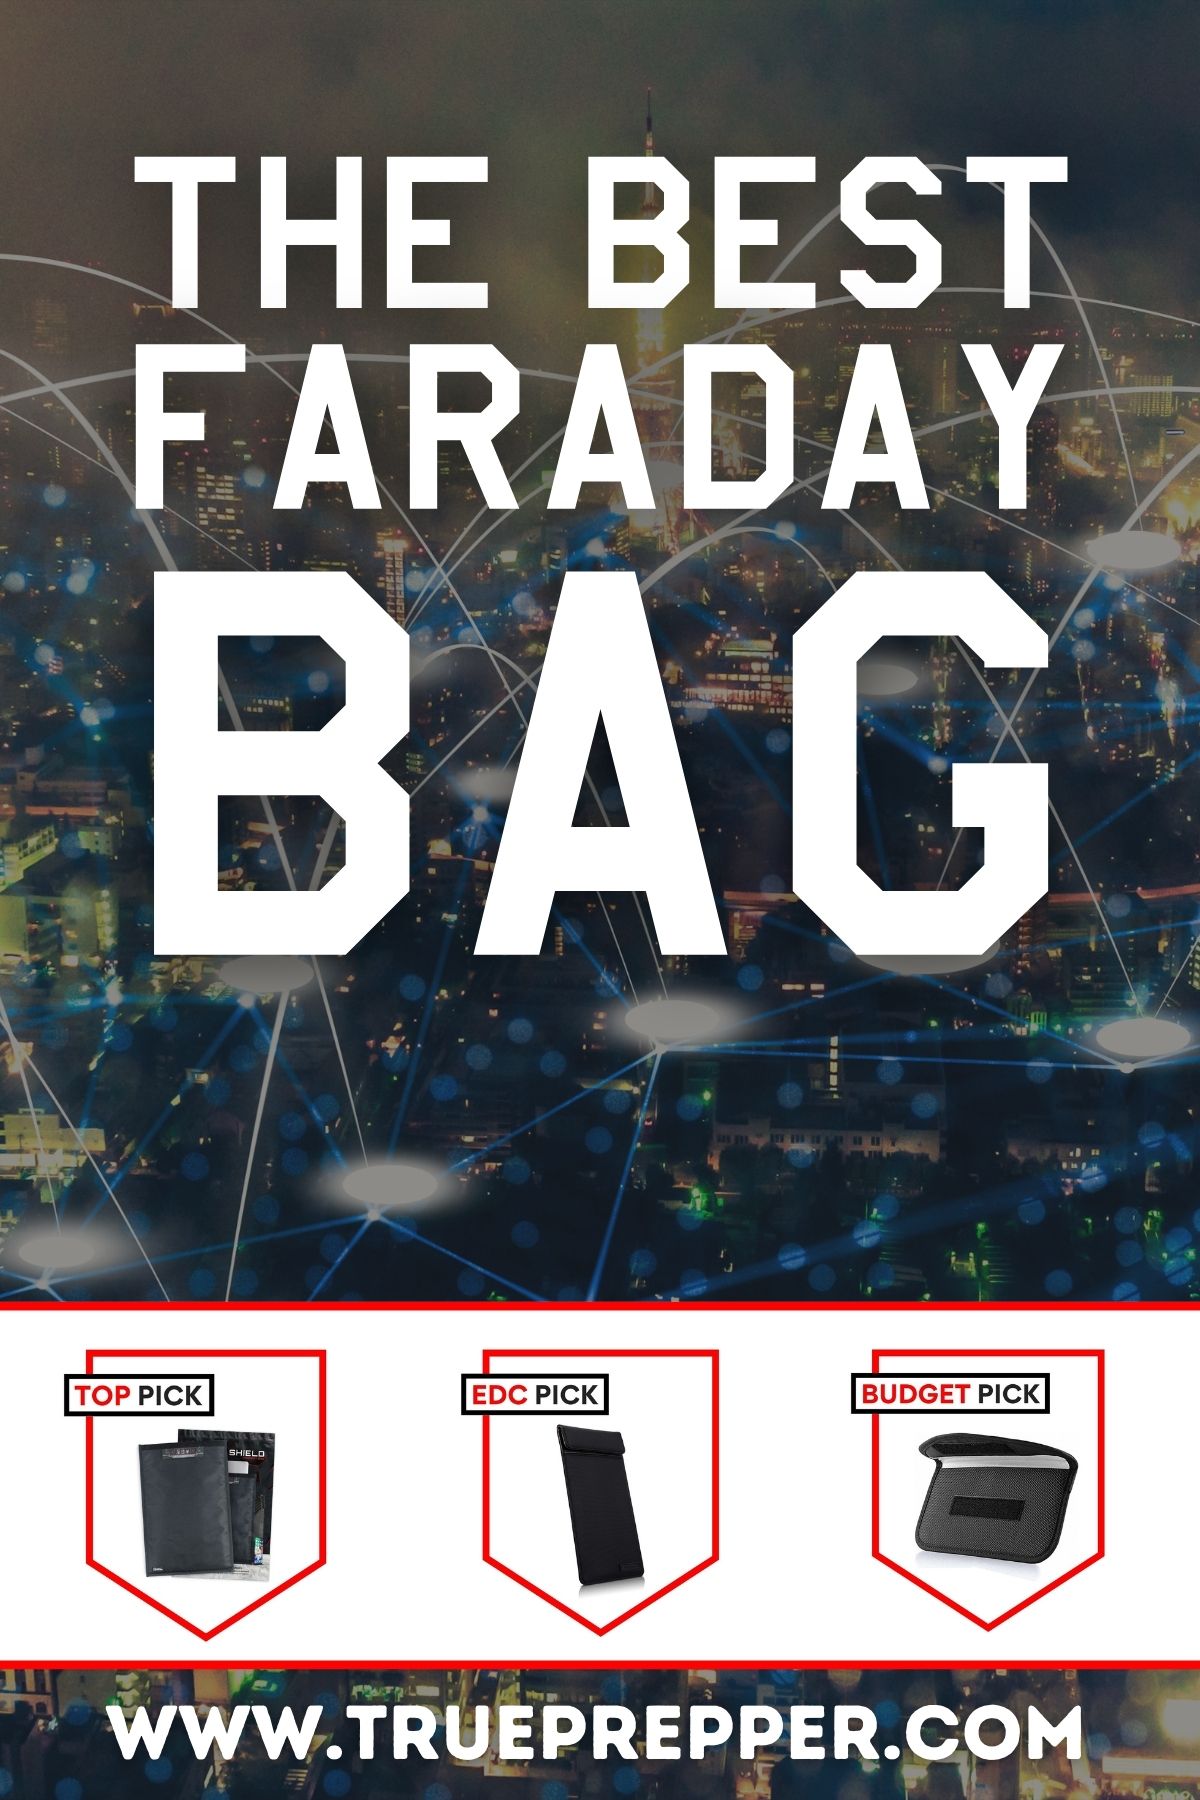 The Best Faraday Bag